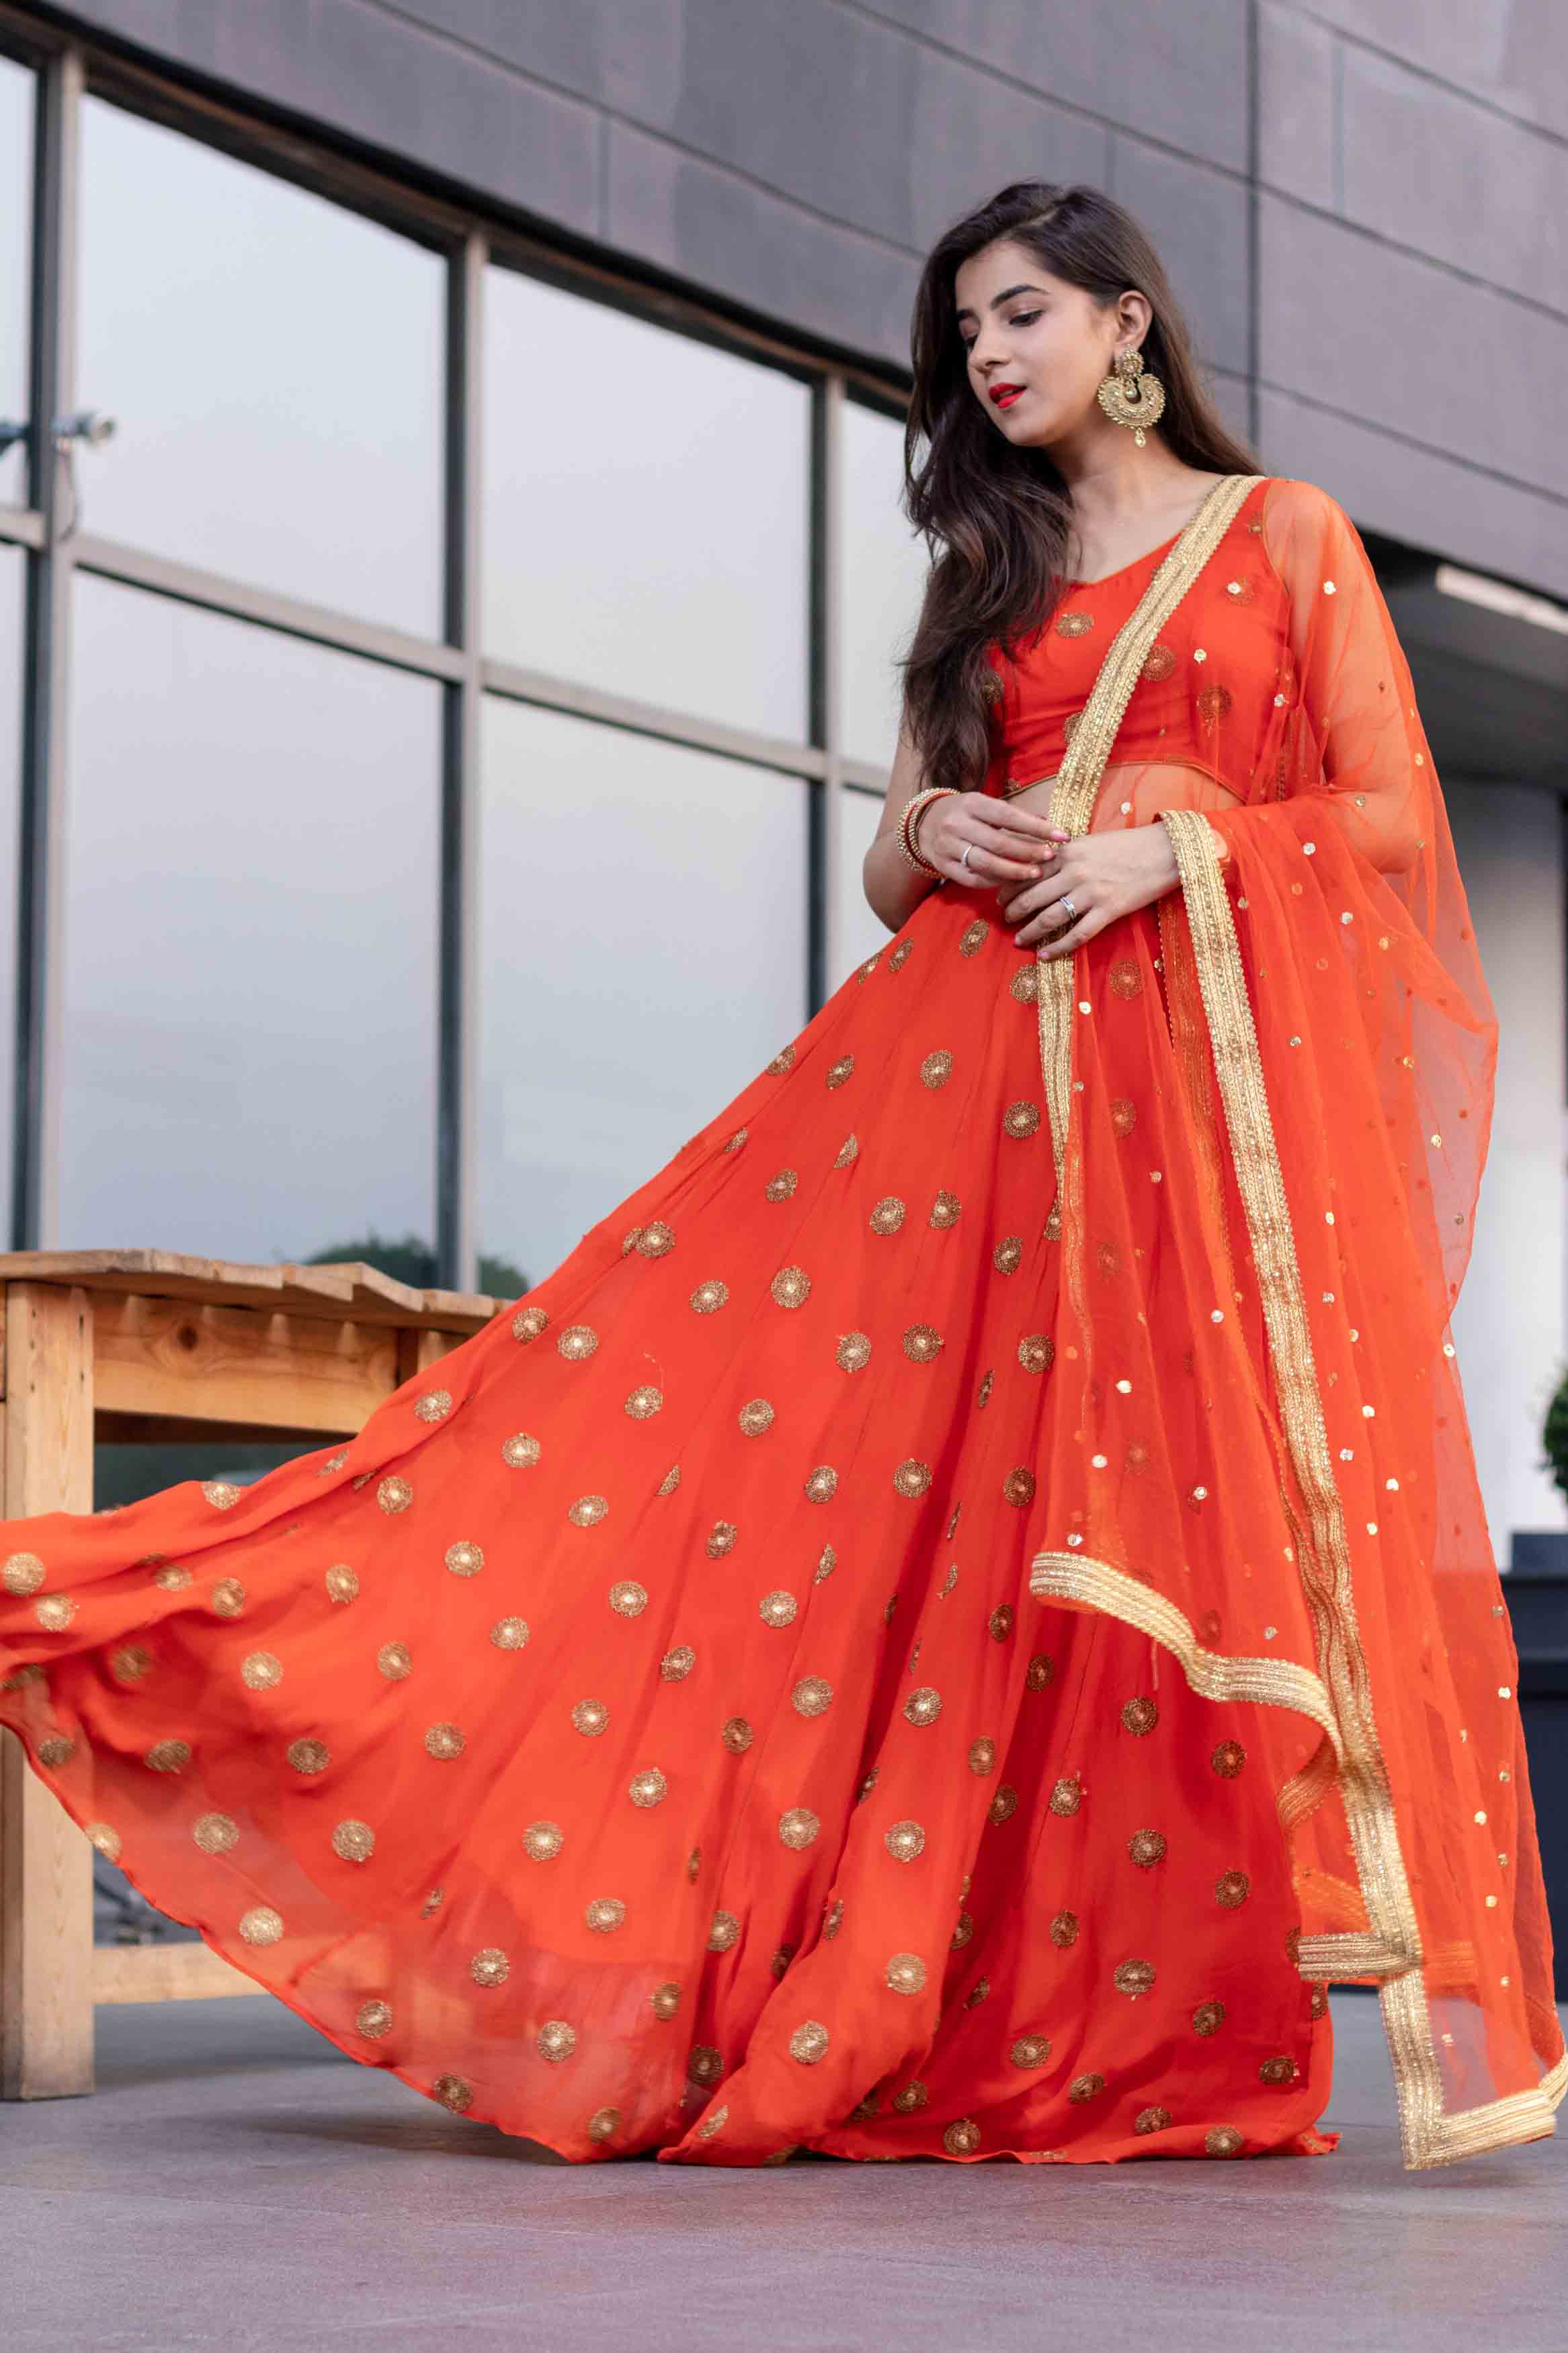 Kiara Advani's best traditional lehenga and saree looks to get inspired